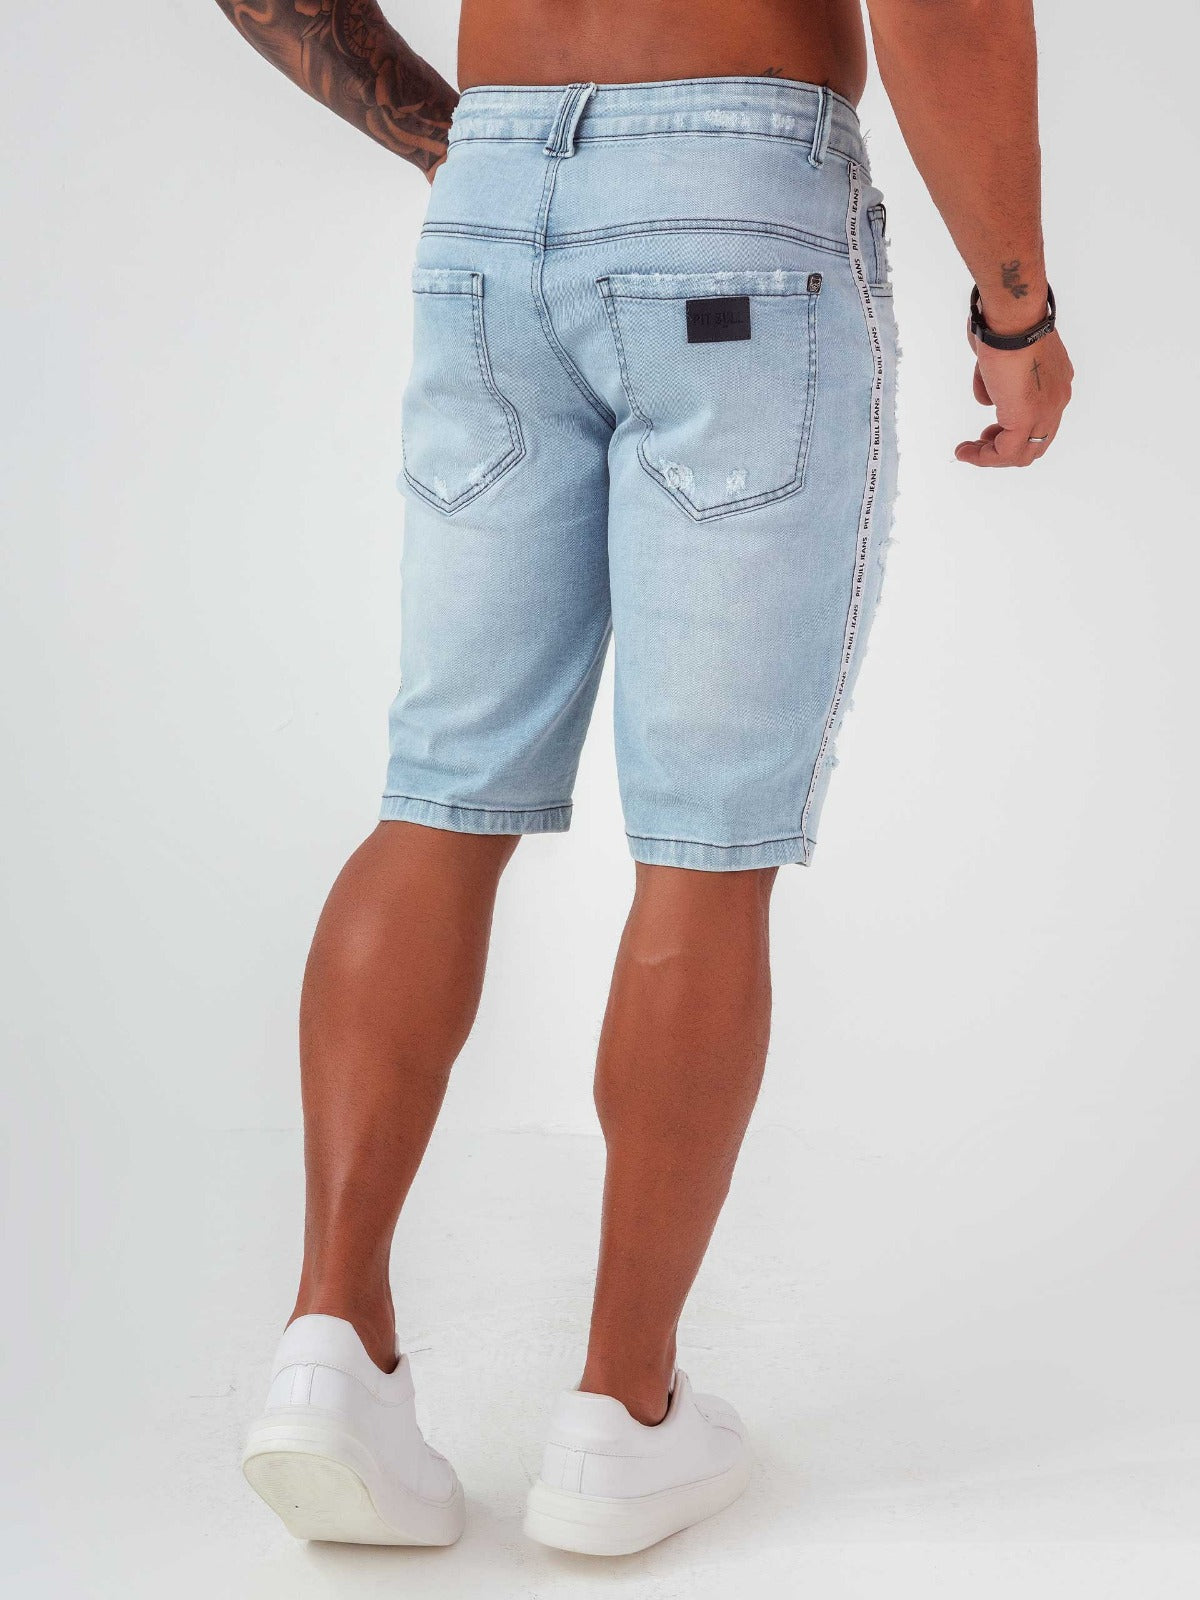 Shorts Jeans Masculino Pit Bull 62627